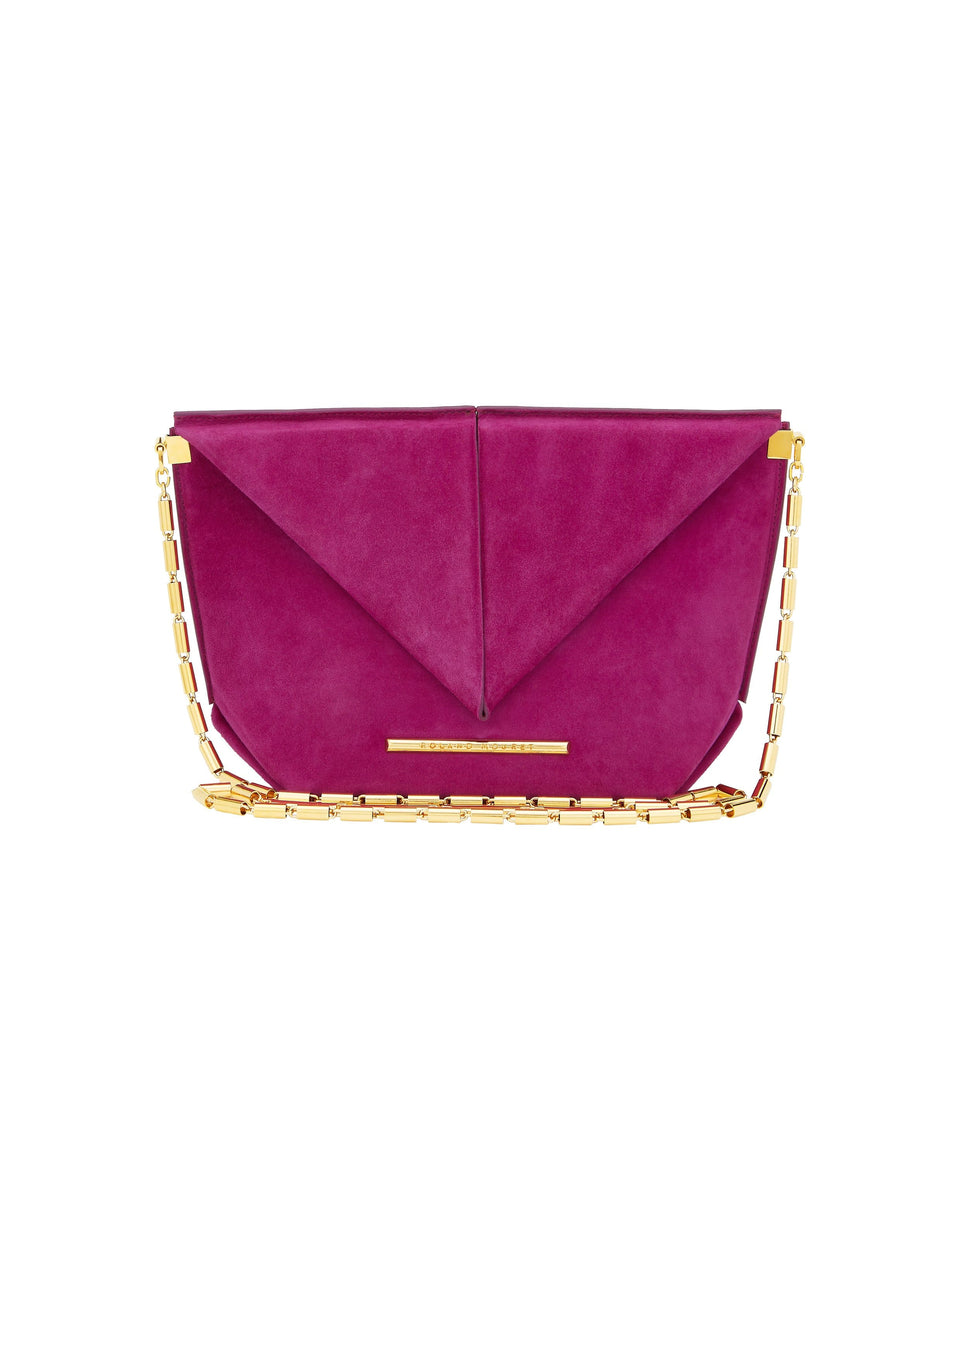 Designer Handbags UK | Shop Designer Clutch Bags & Leather Handbags ...